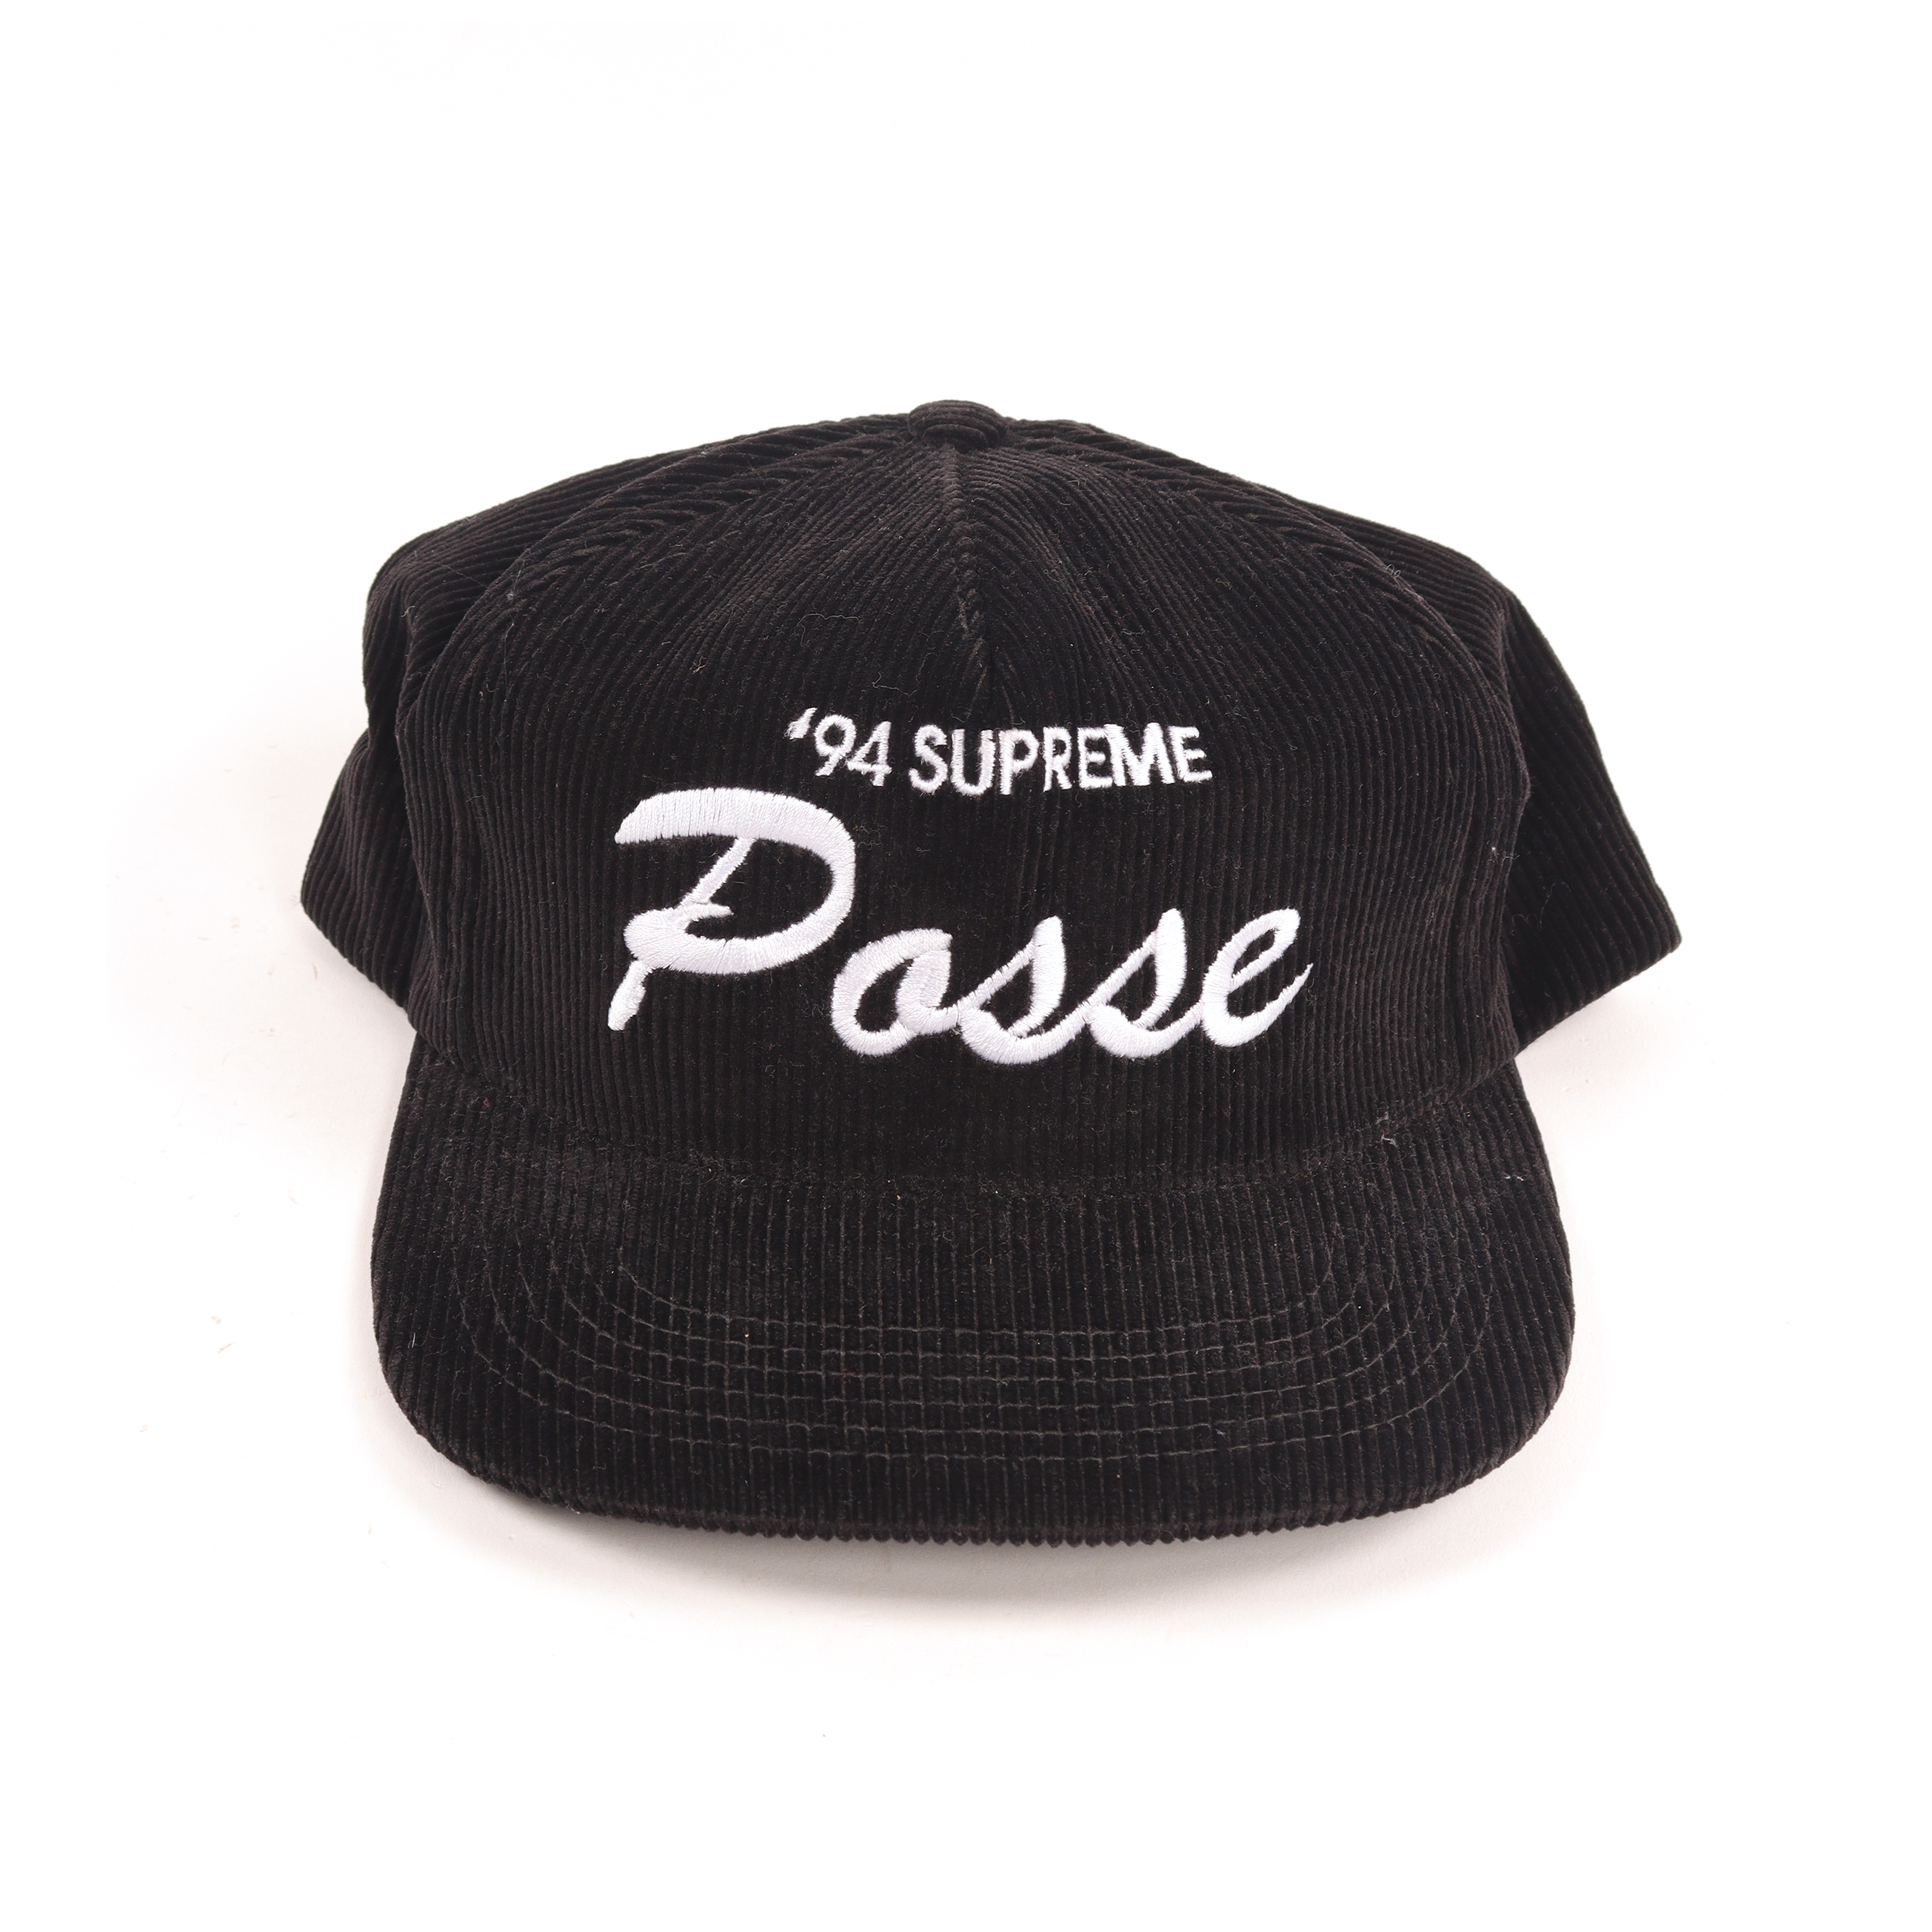 94' Supreme Posse Hat